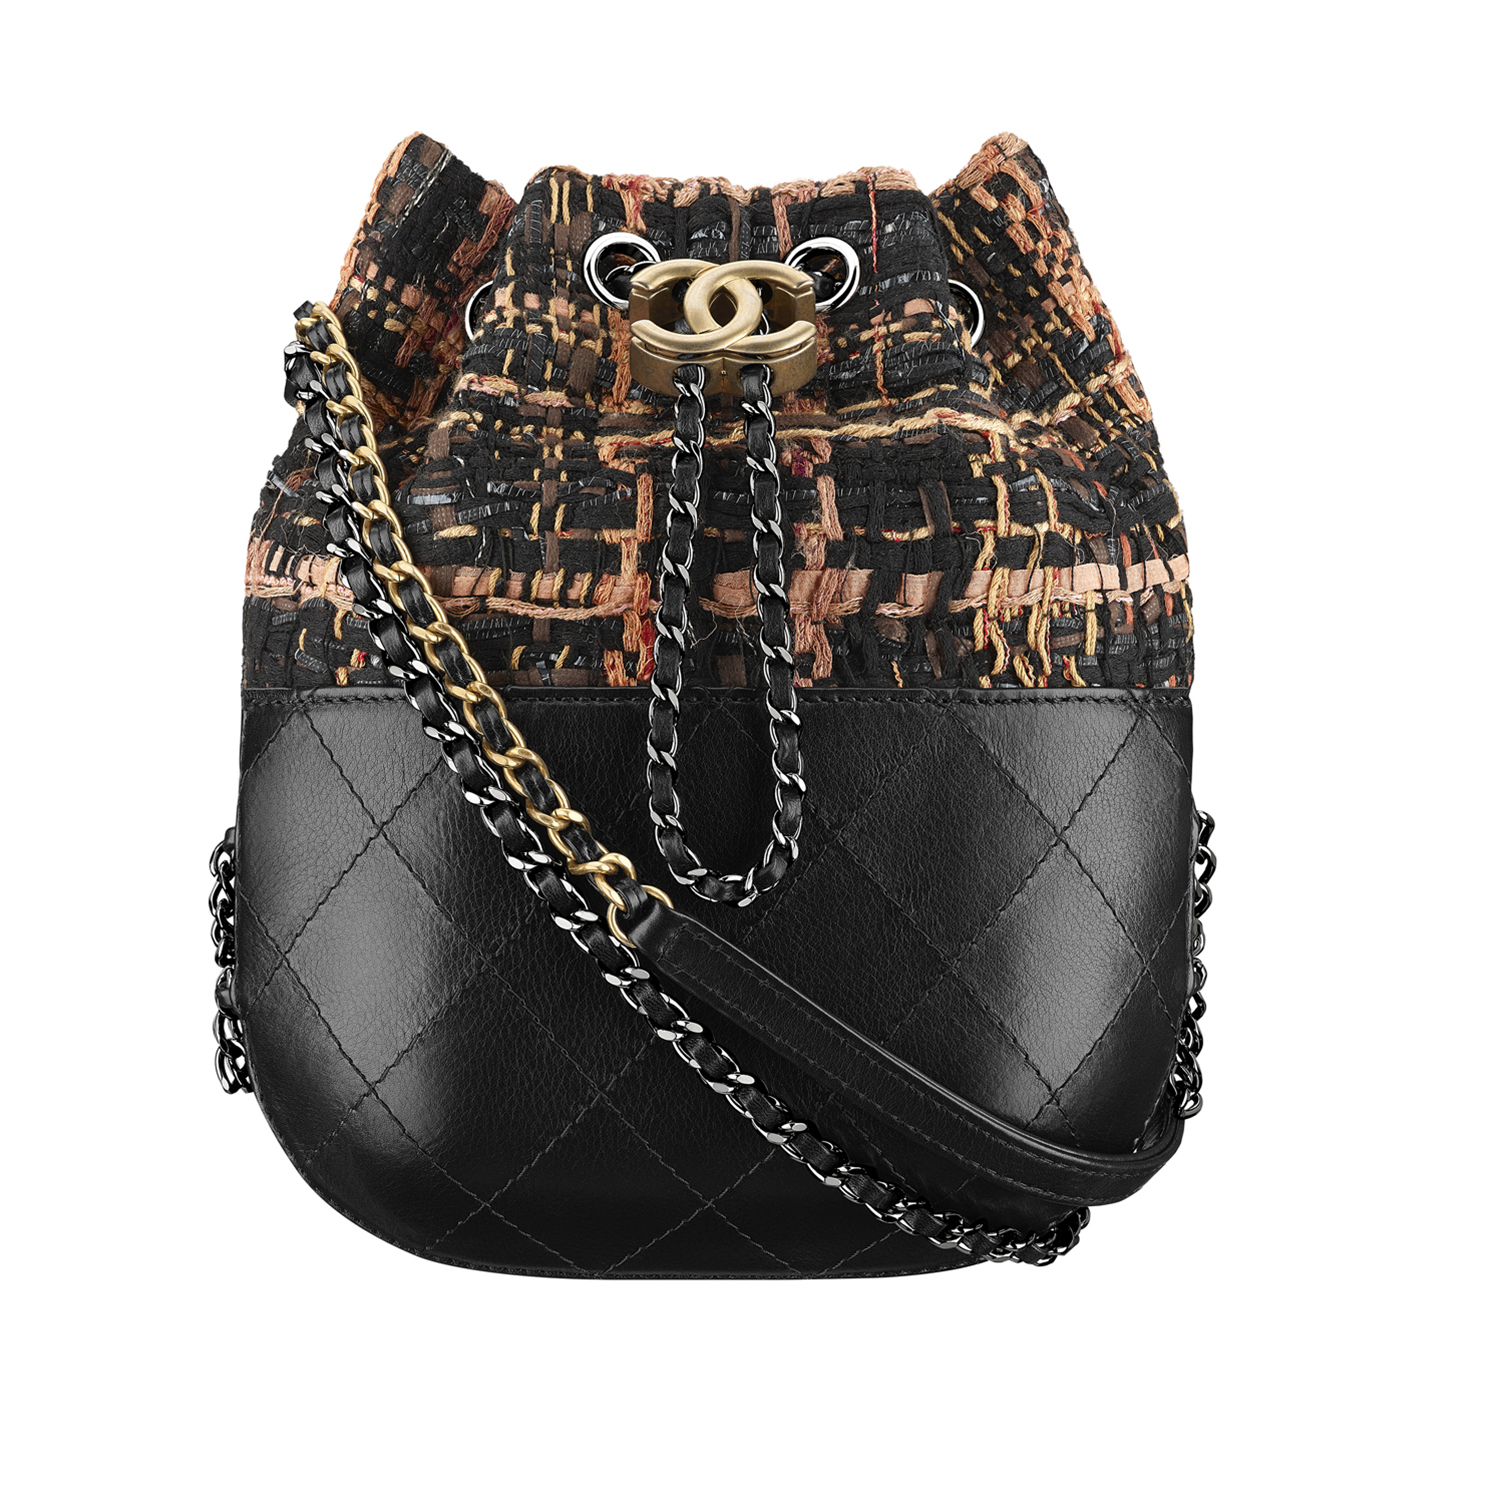 Chanel Handbag In Nordstrom Store SEMA Data Coop